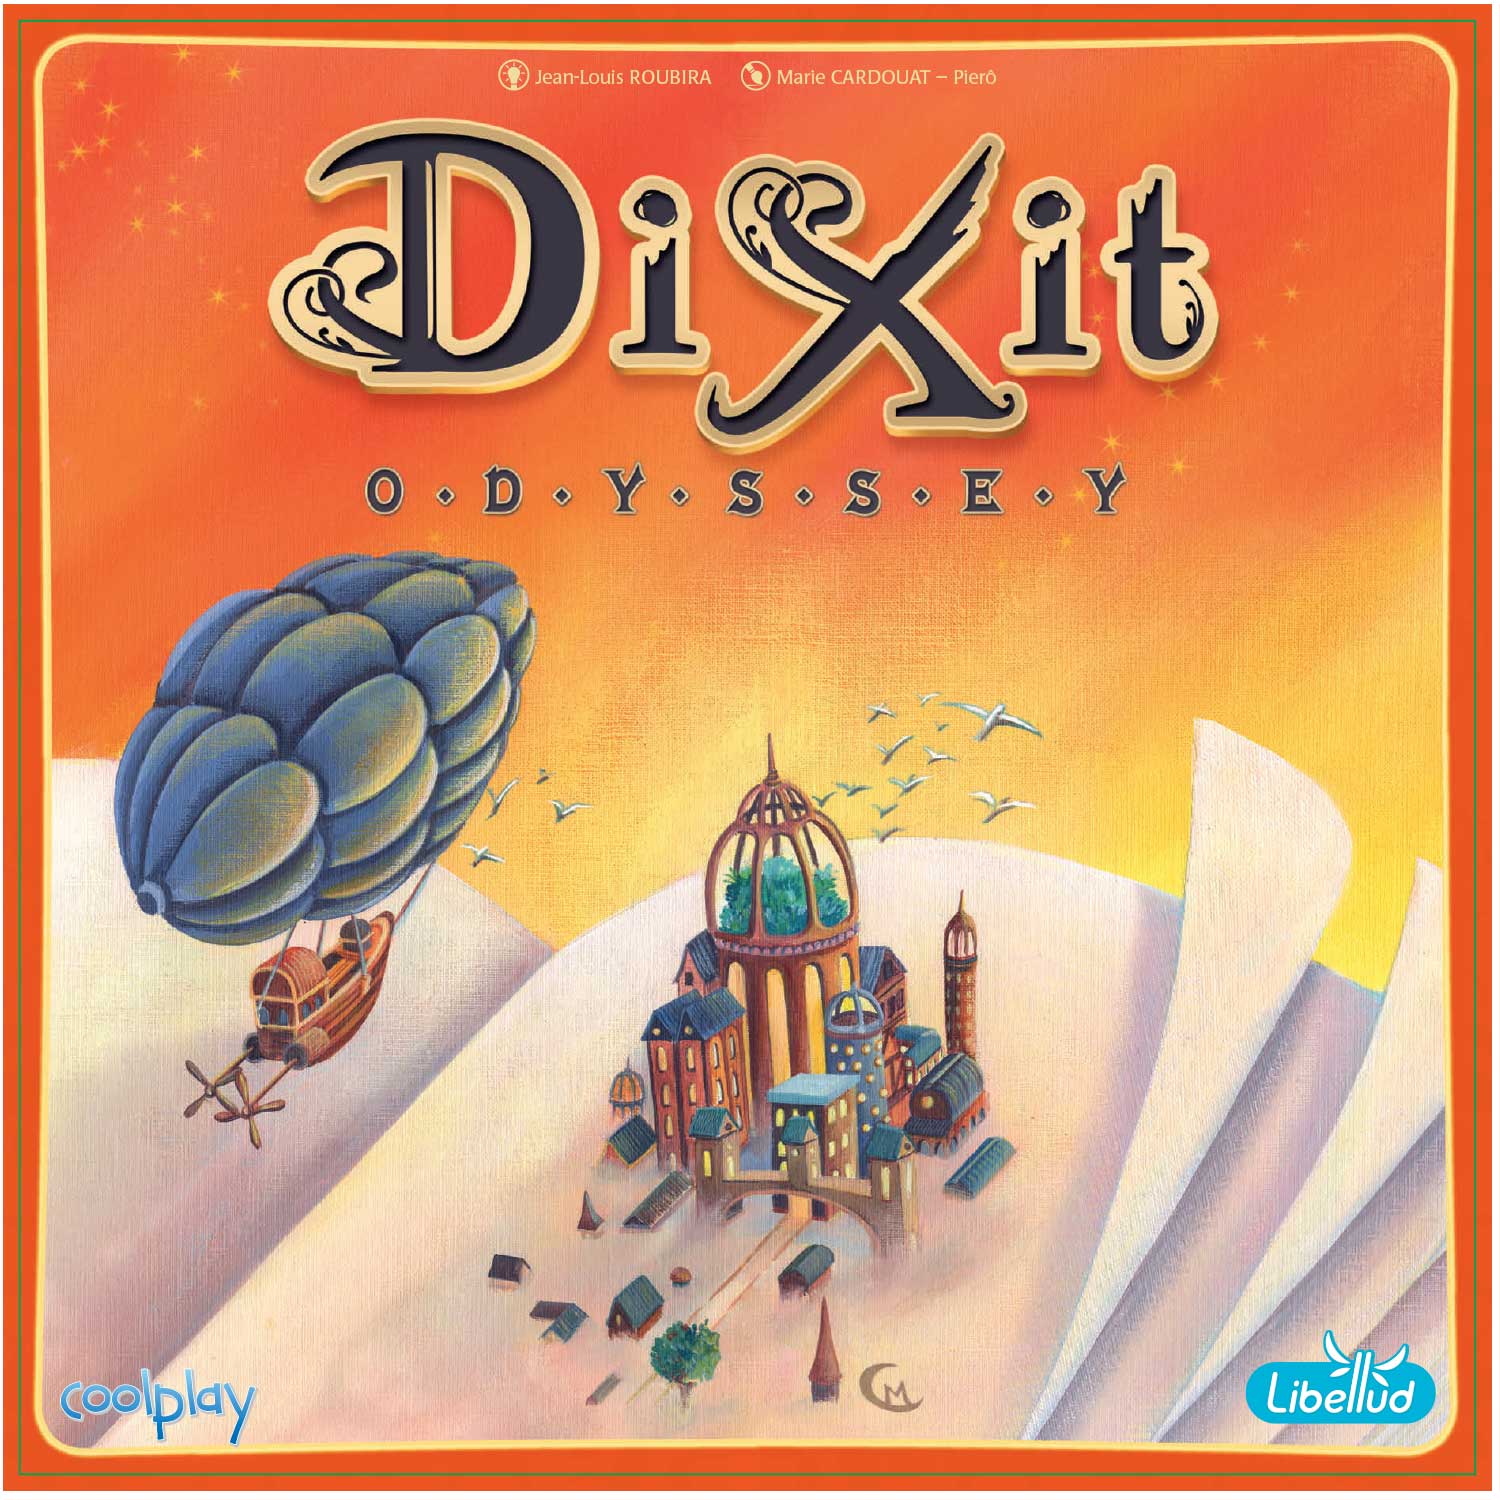 Društvena igra Dixit Odyssey 